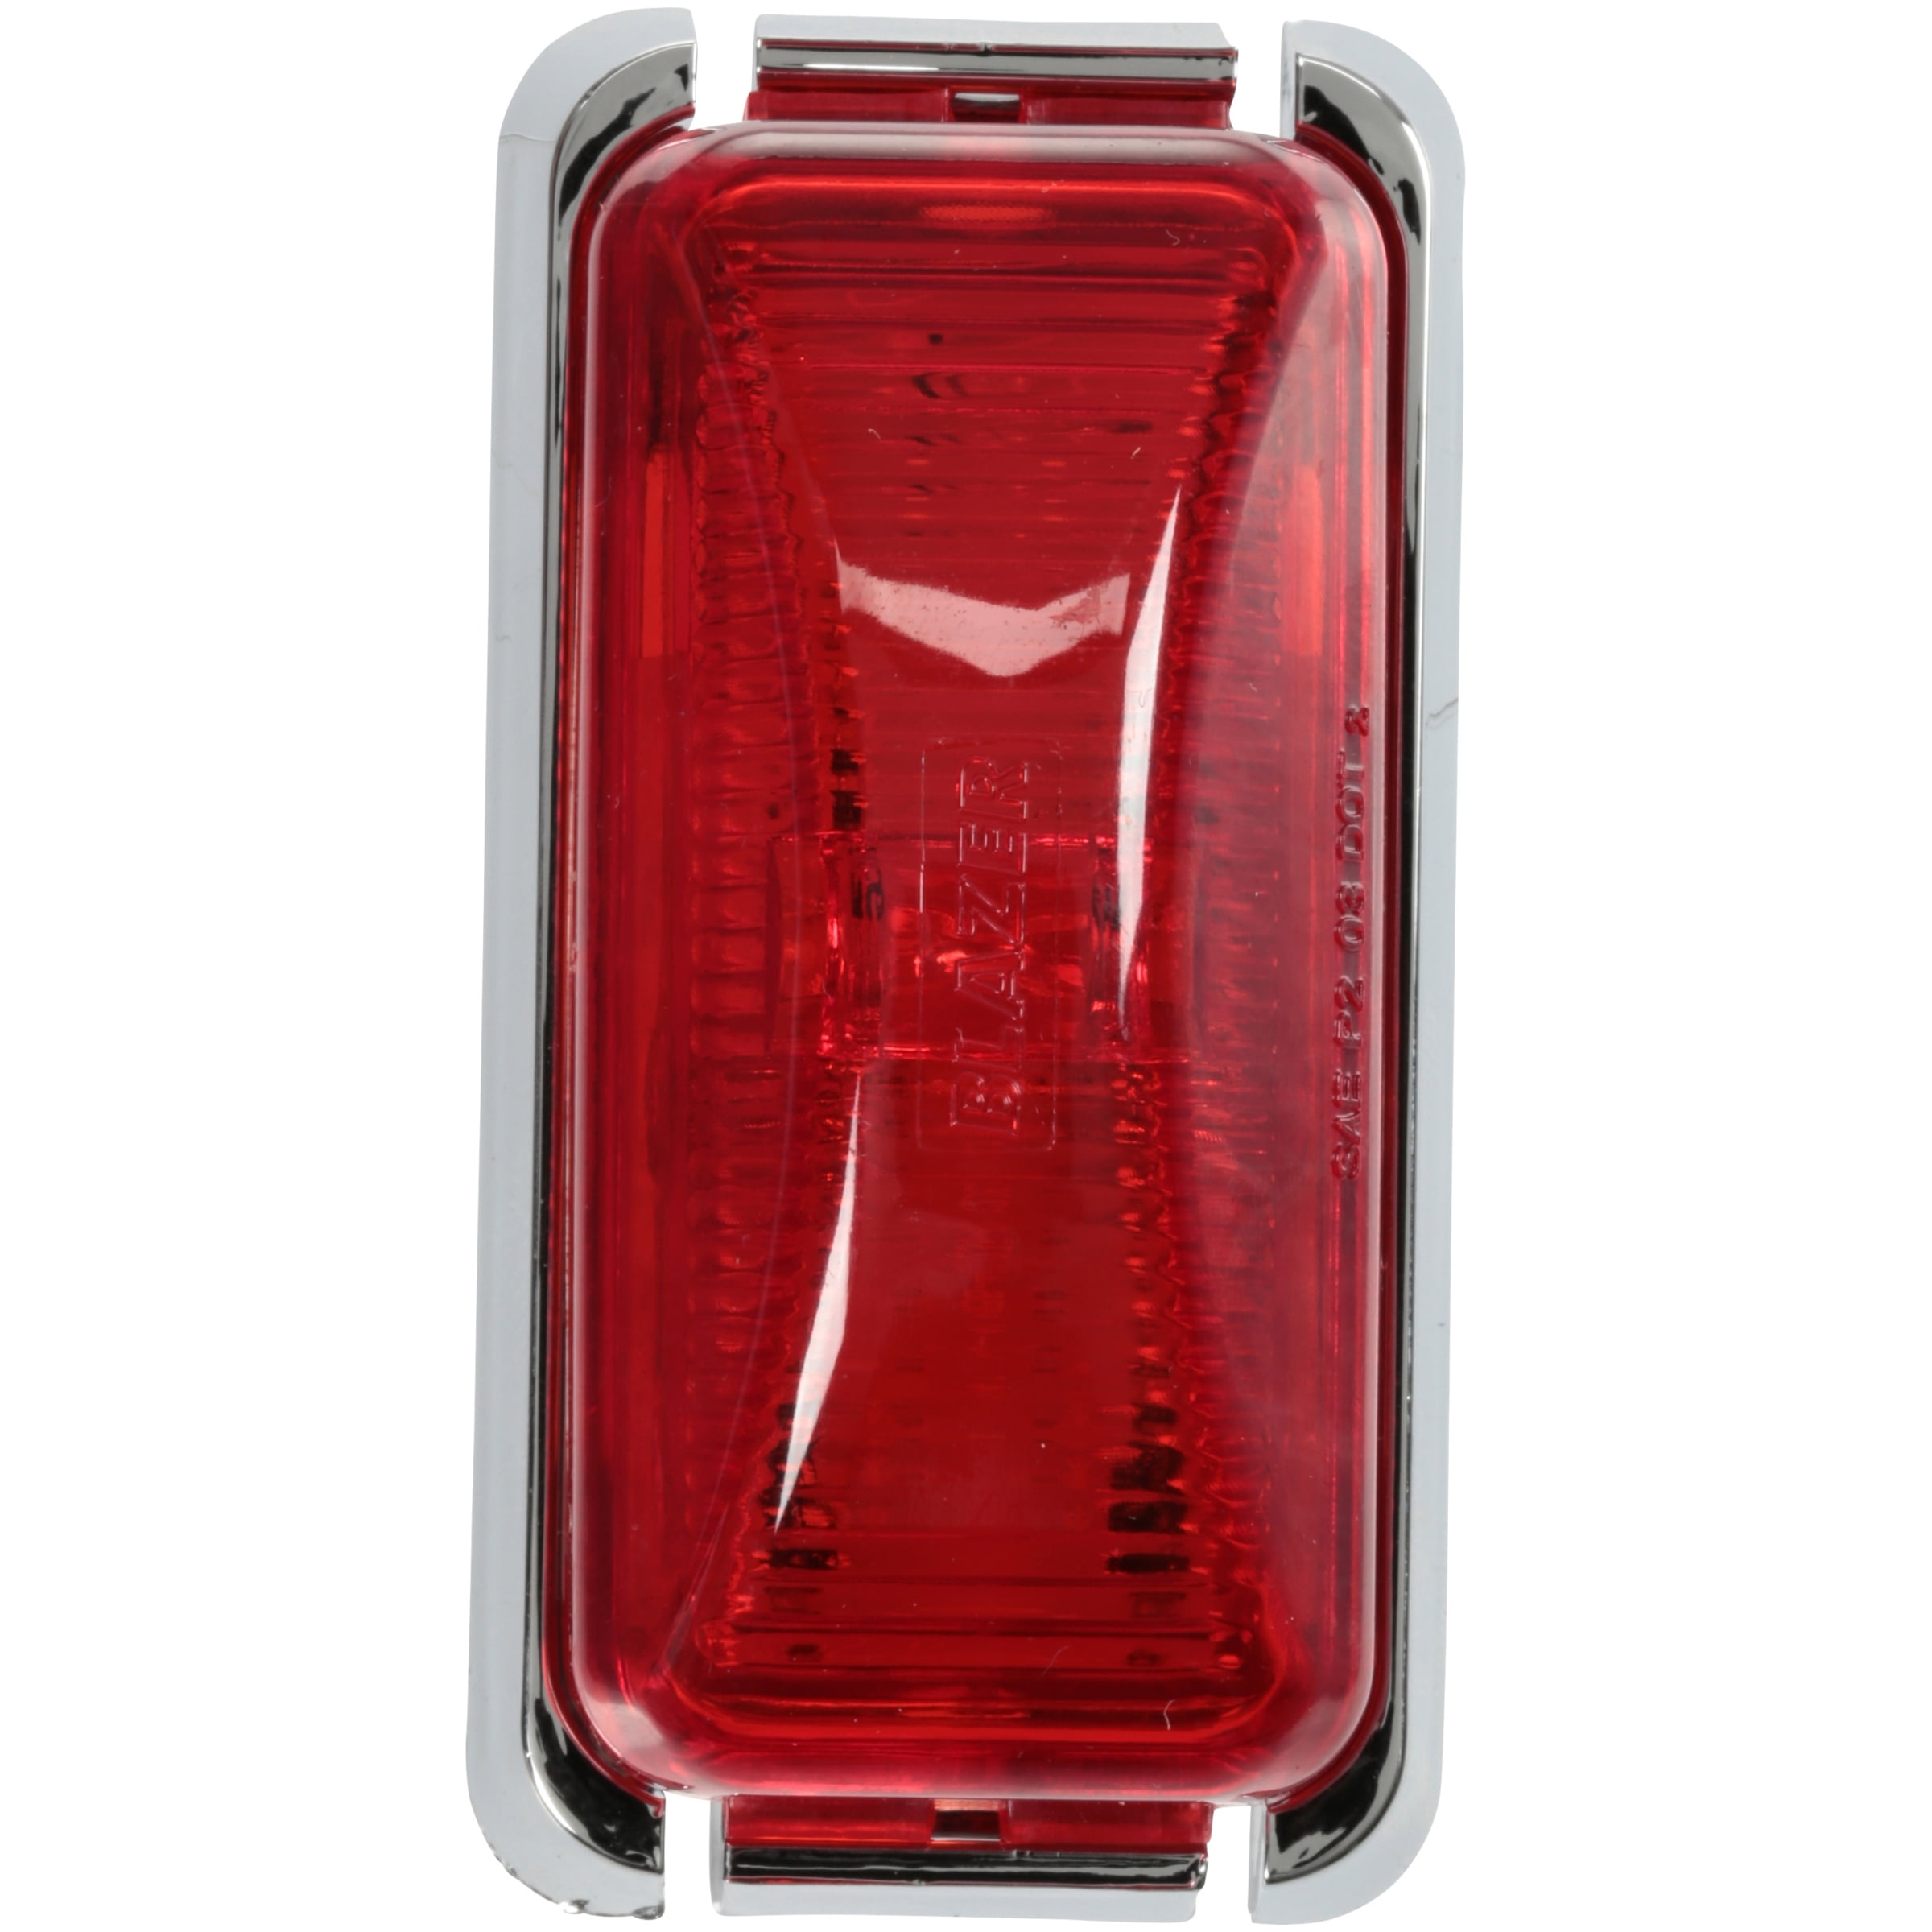 Blazer C3491RC LED Stop/Turn/Tail Light Bar with Chrome Bezel Guide post light 